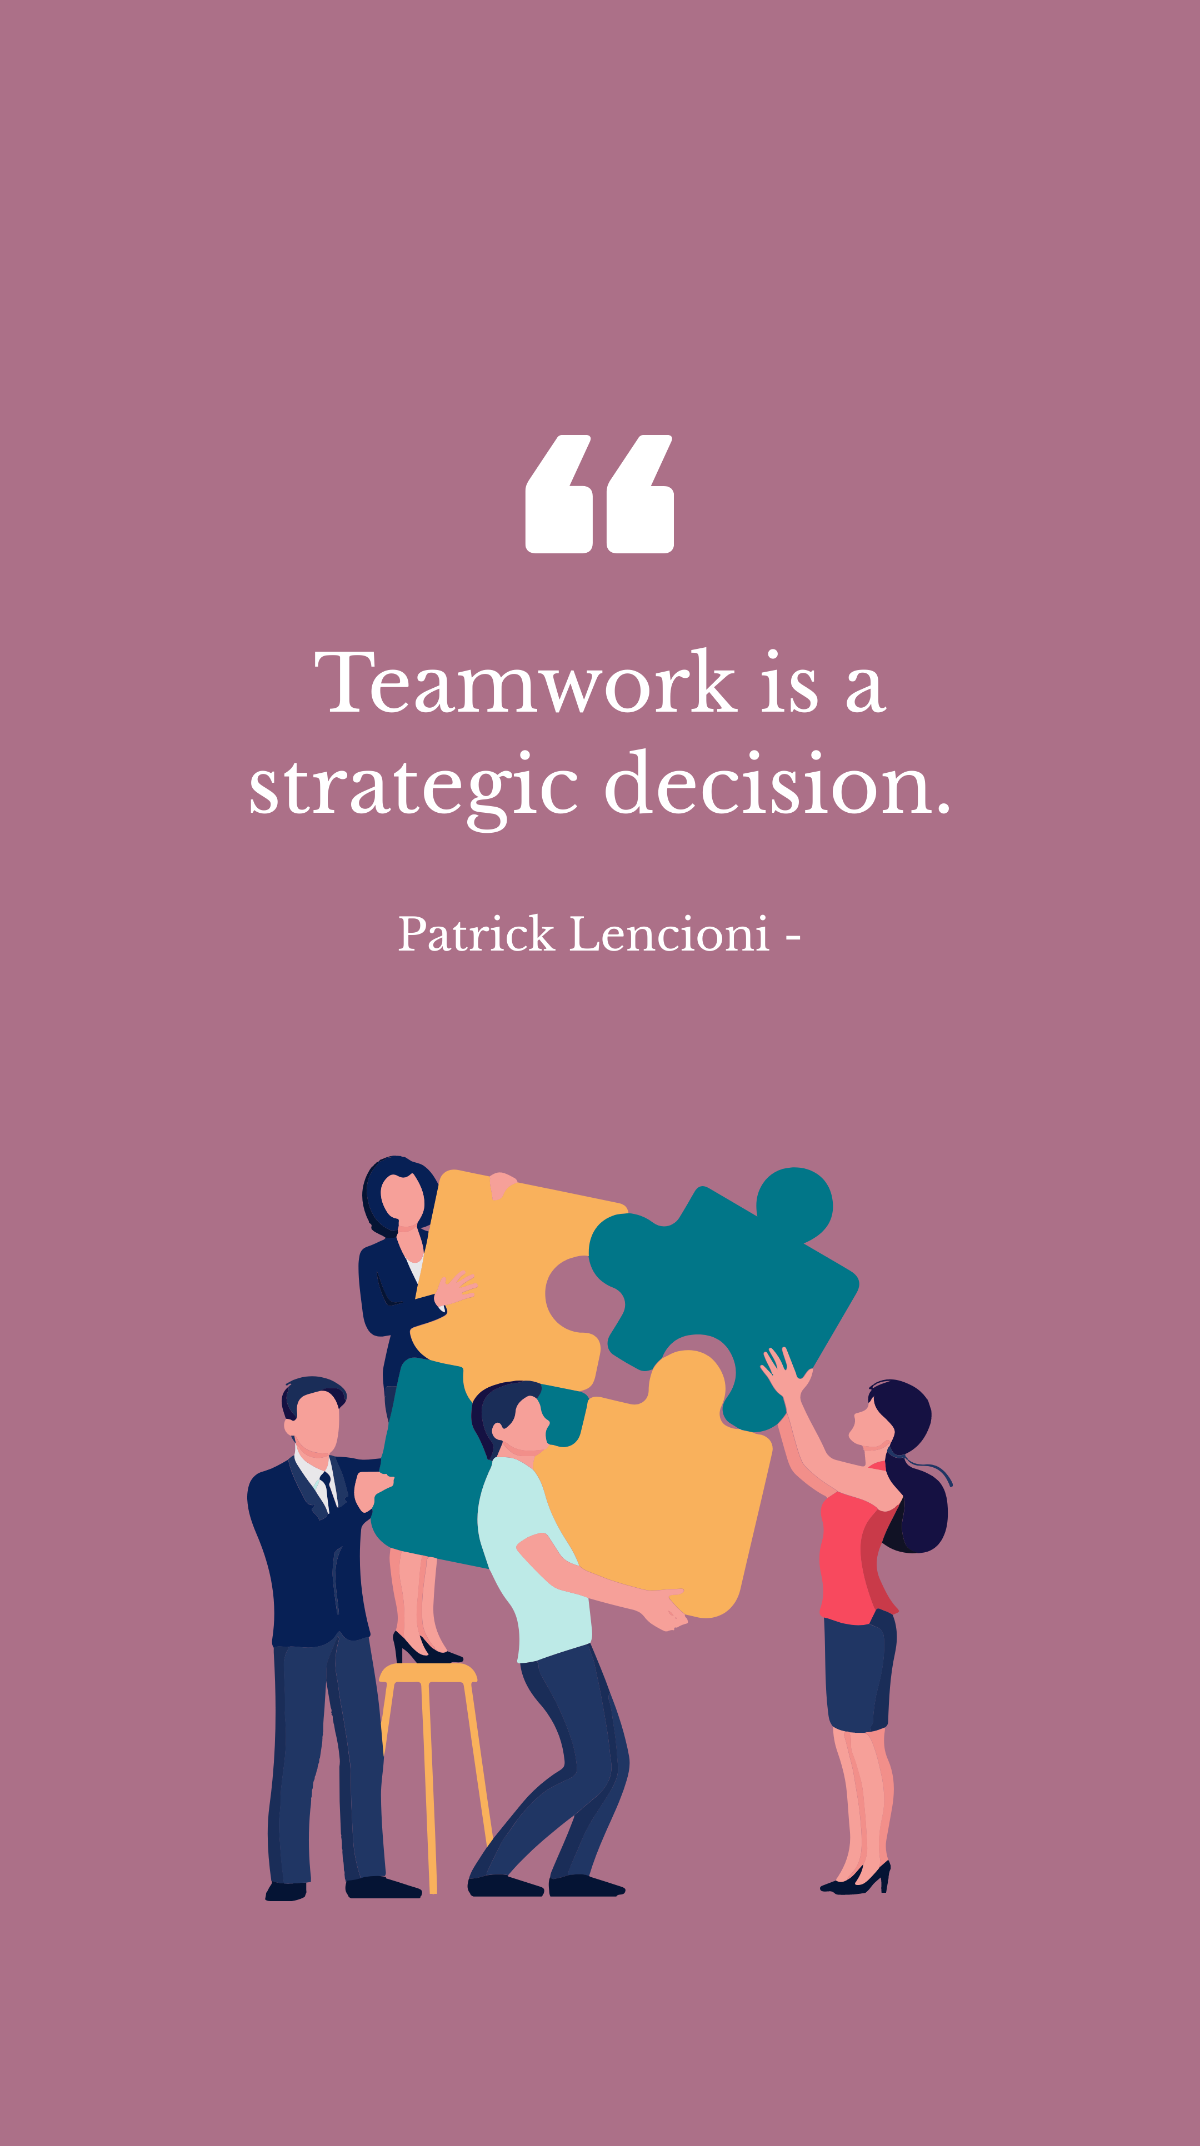 Patrick Lencioni - Teamwork is a strategic decision.